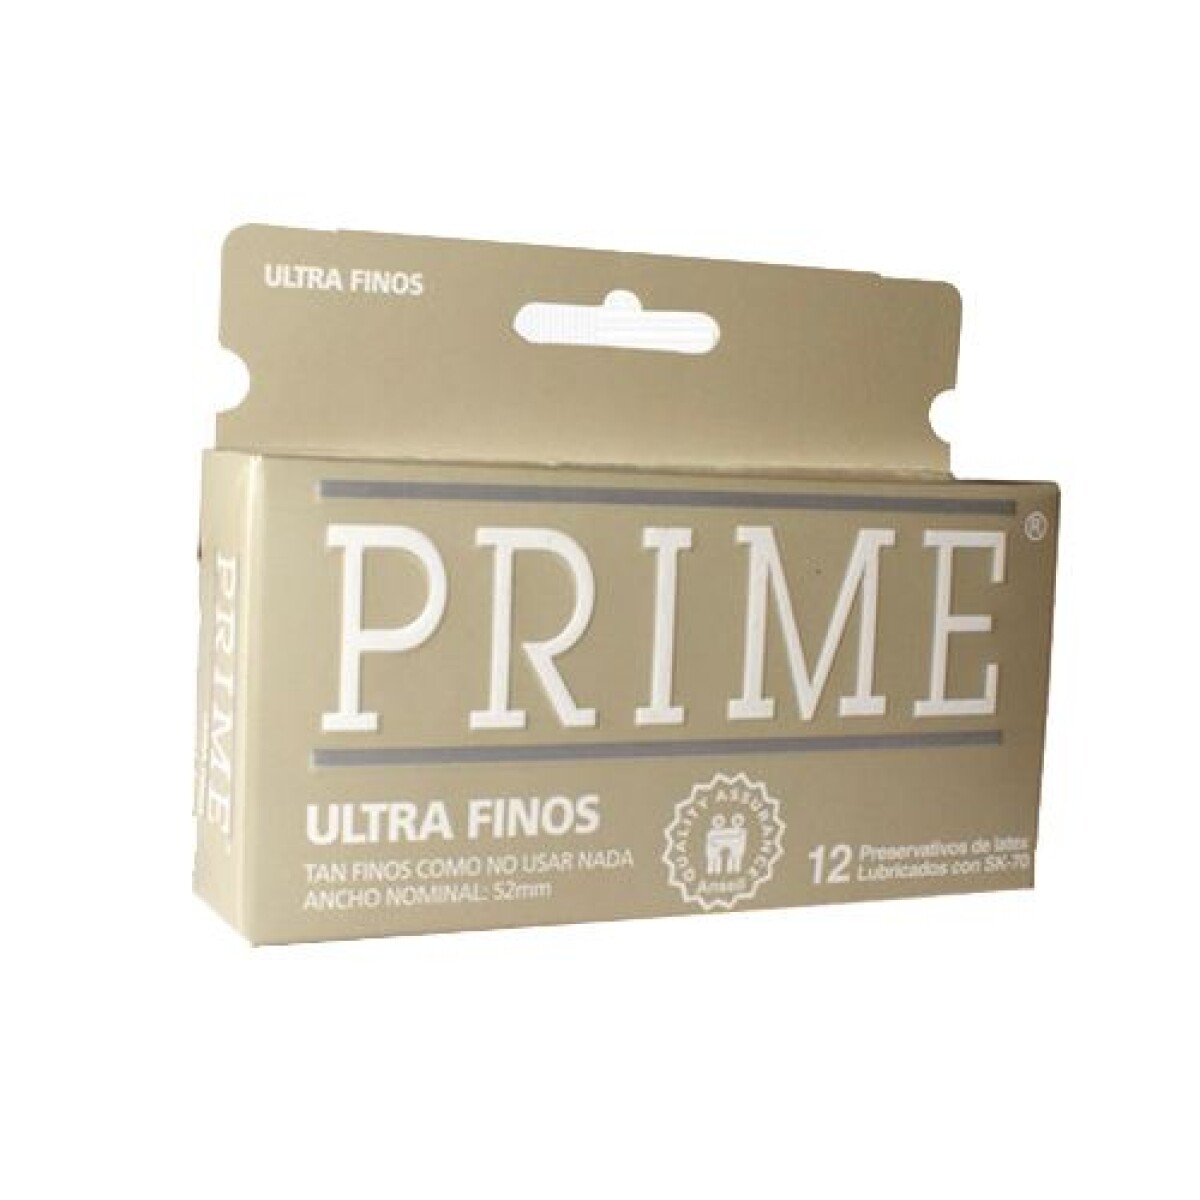 Preservativos Prime x12 - Ultrafinos 